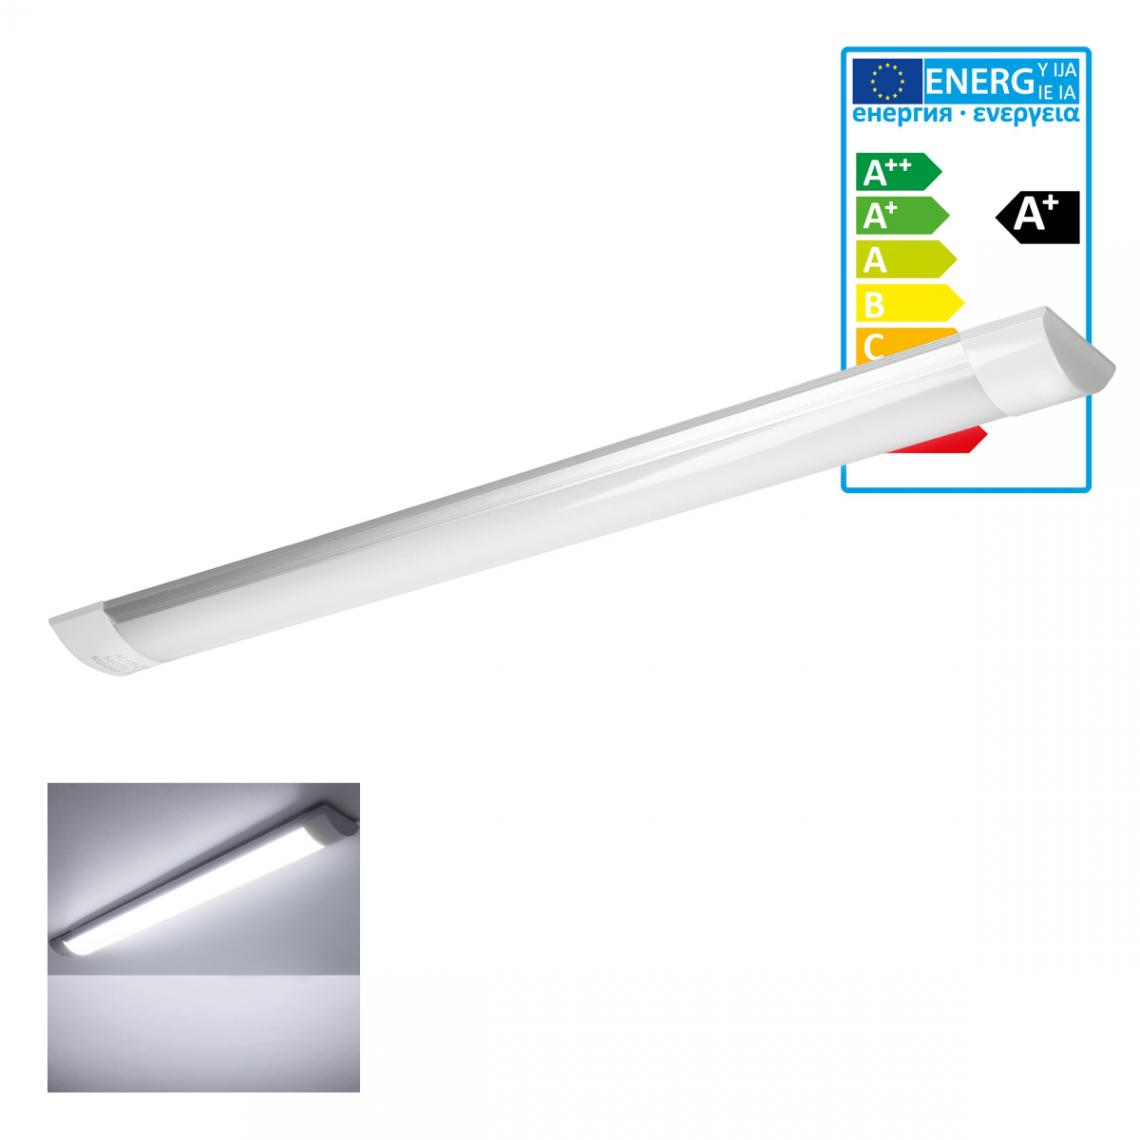 Ecd Germany - Set 15x LED batten tube plafond 18W 60cm blanc froid 220-240V en aluminium - Tubes et néons